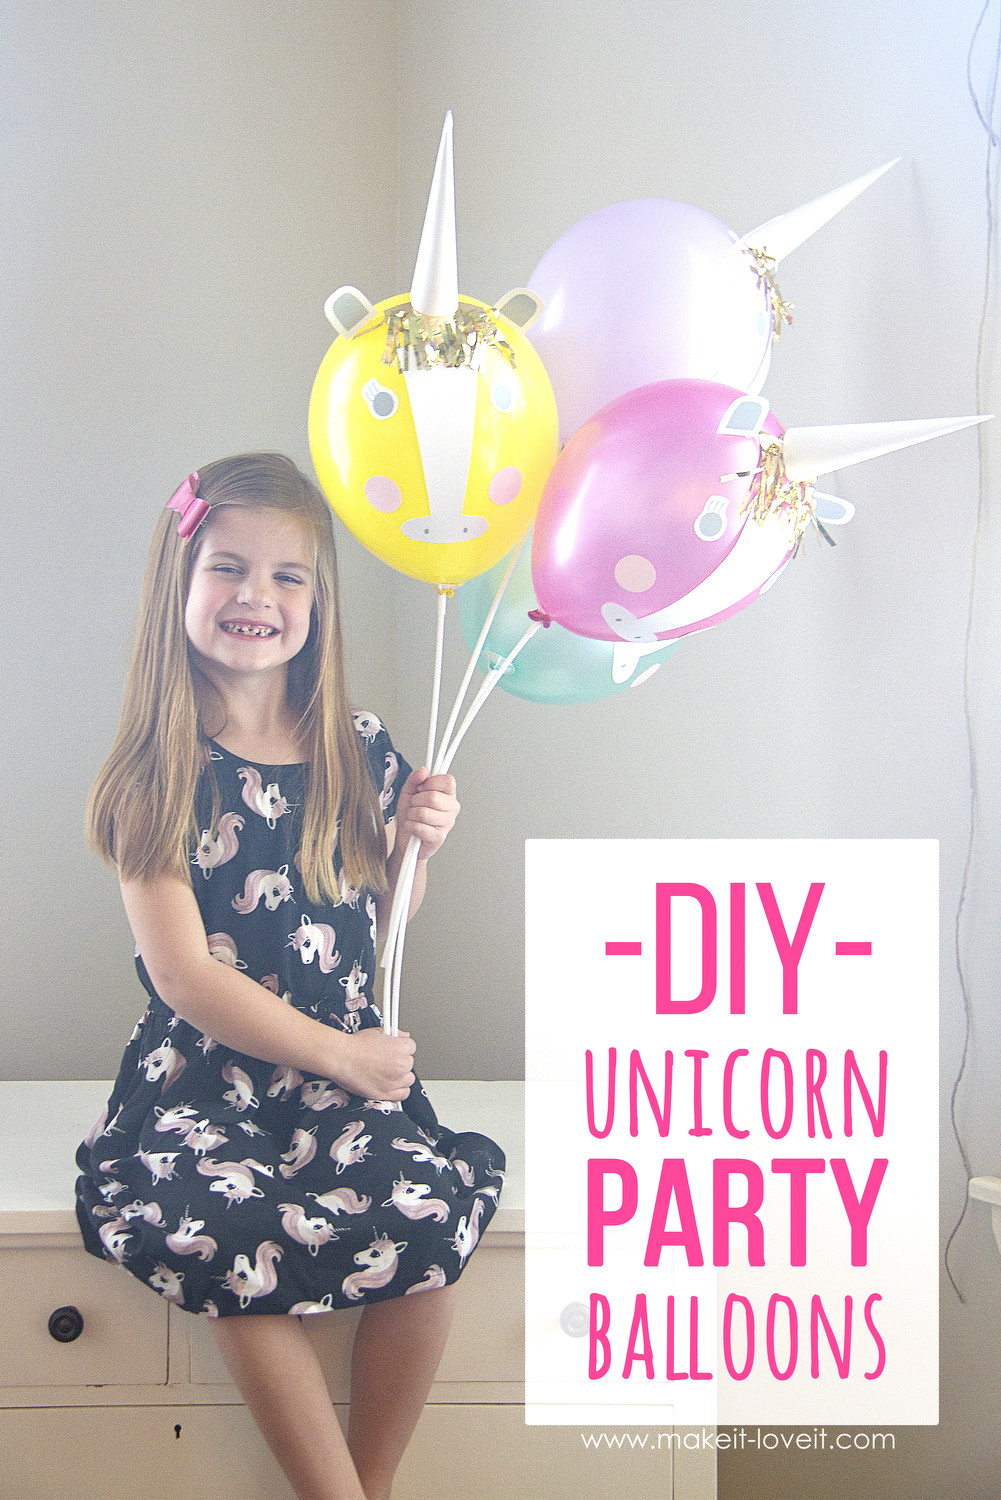 Diy Unicorn Party Ideas
 DIY Unicorn Party Balloons